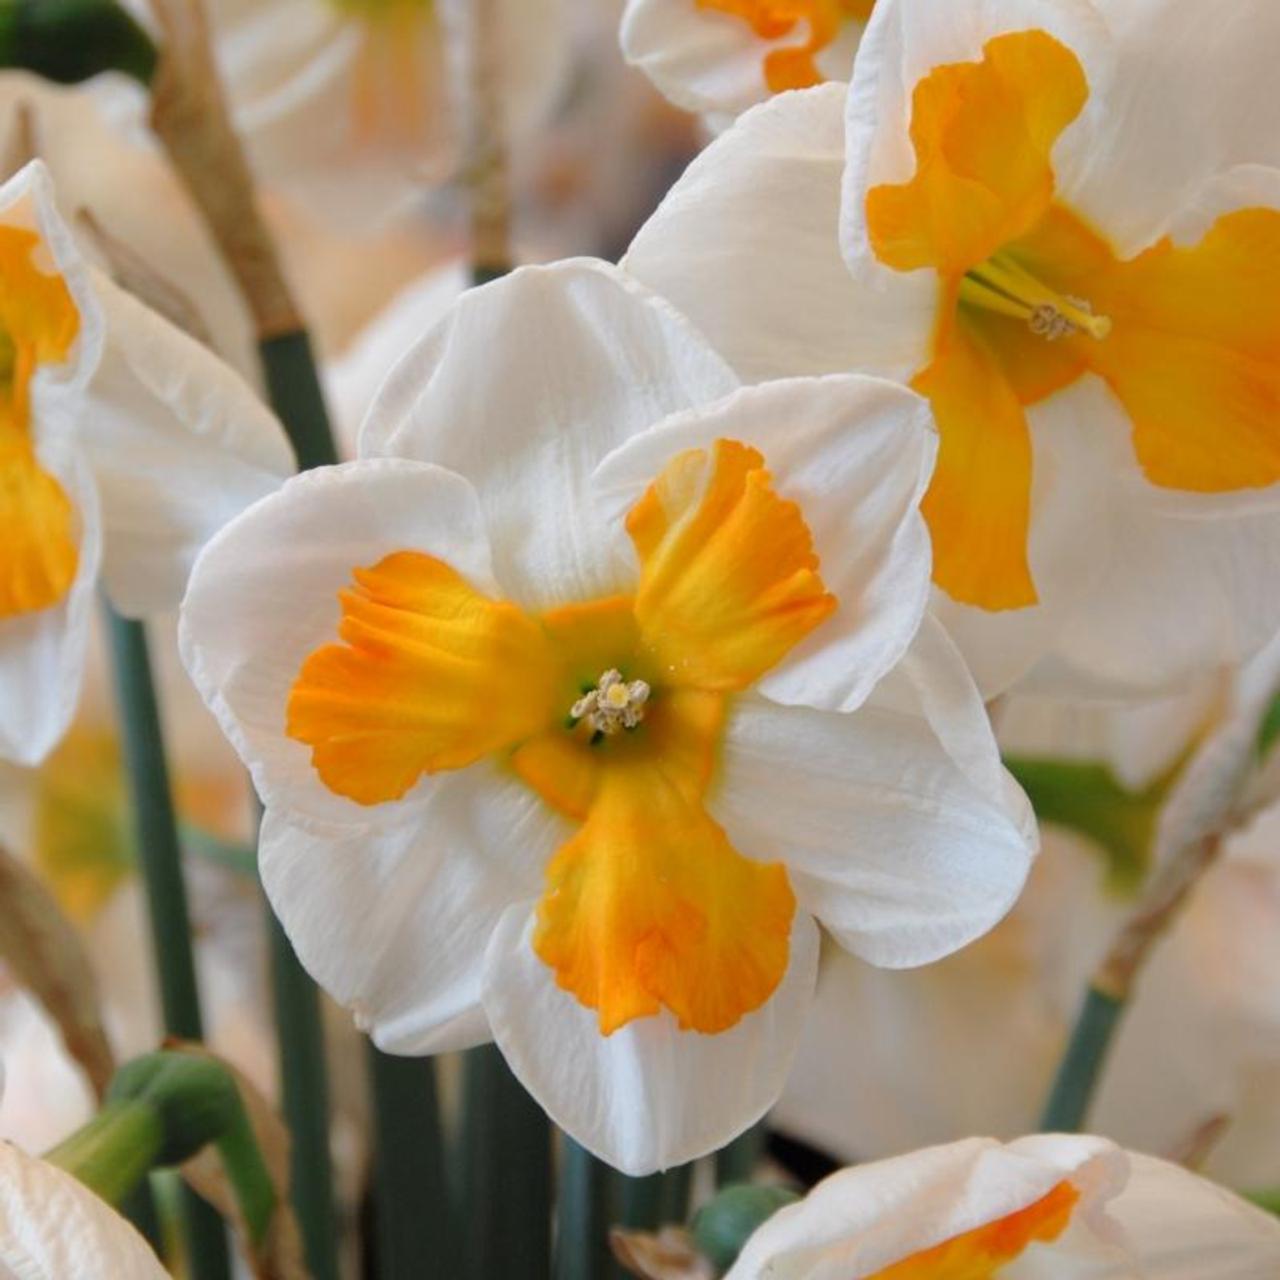 Narcissus 'Tricollet' plant